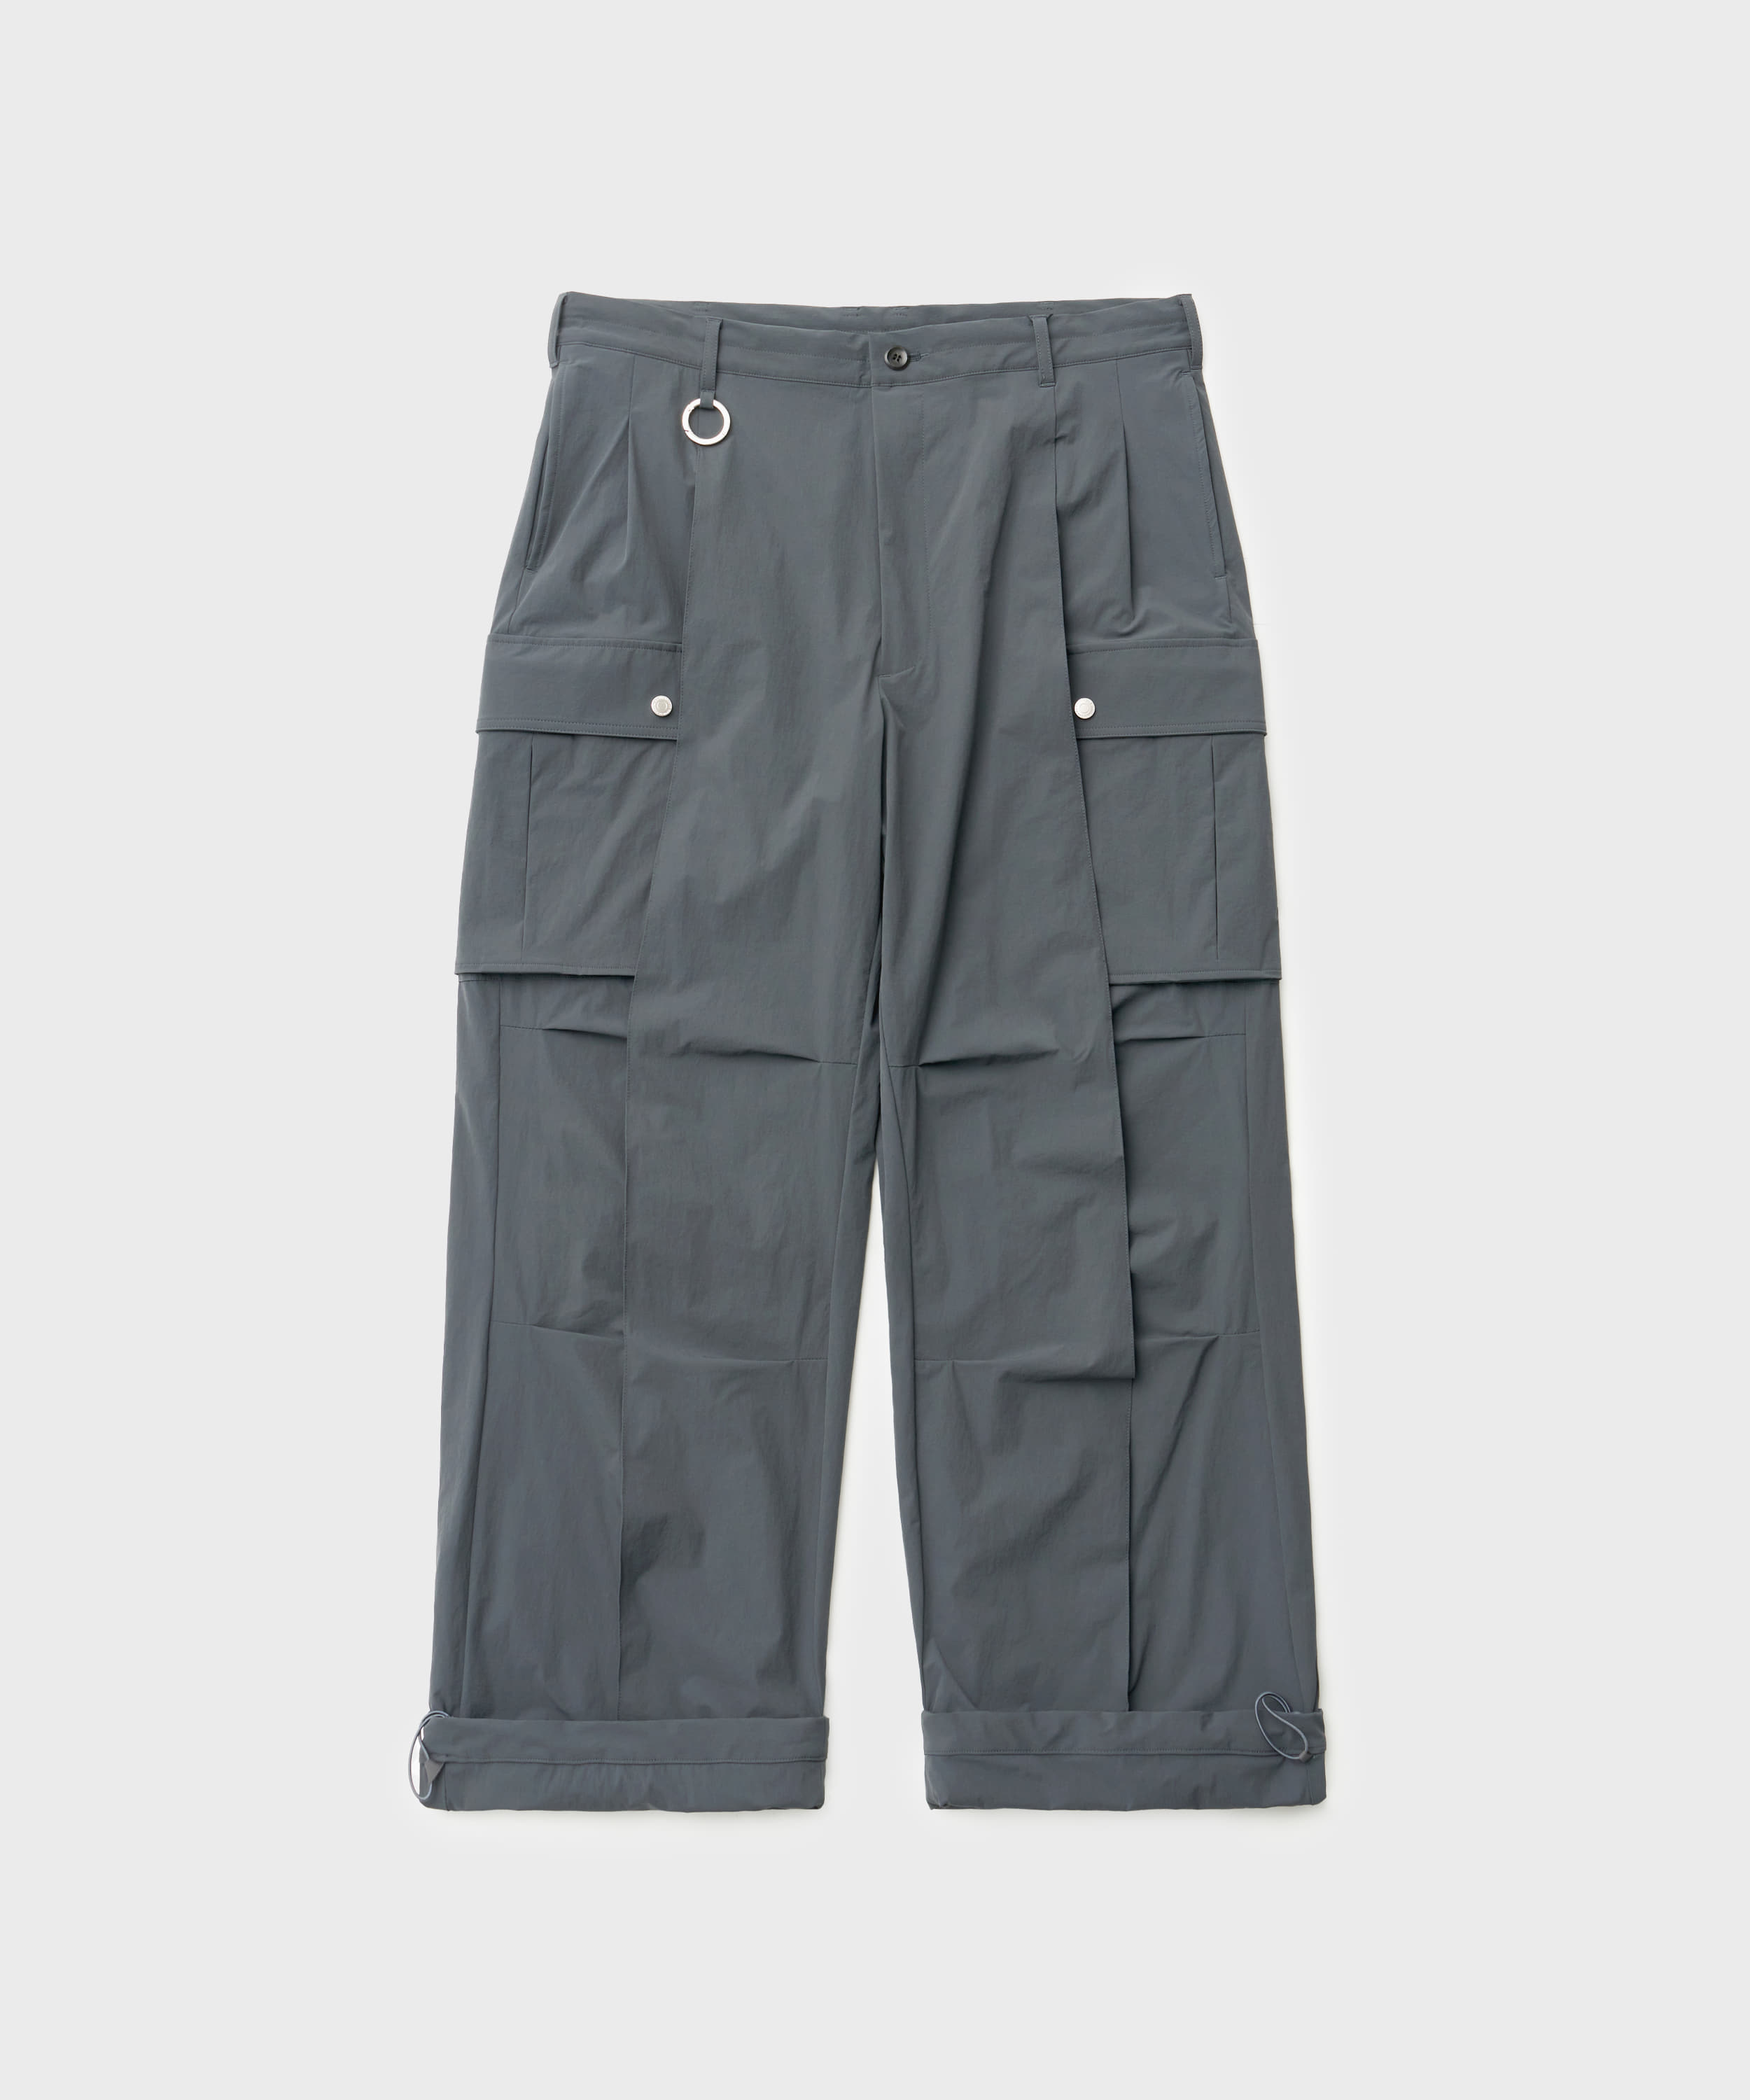 NERDRUM Cargo Pants (Gray)